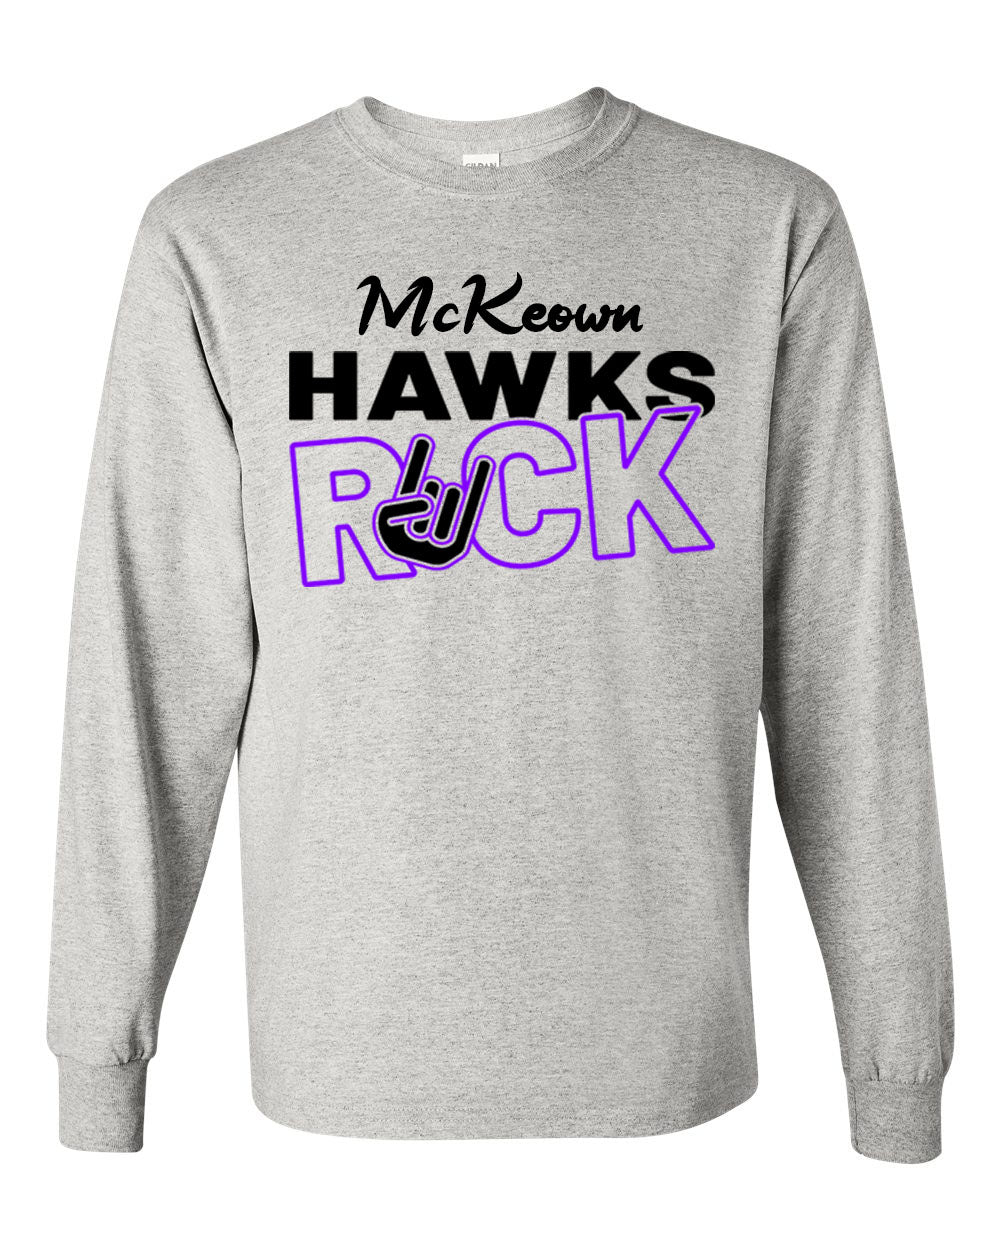 McKeown Hawks Rock Long Sleeve Shirt